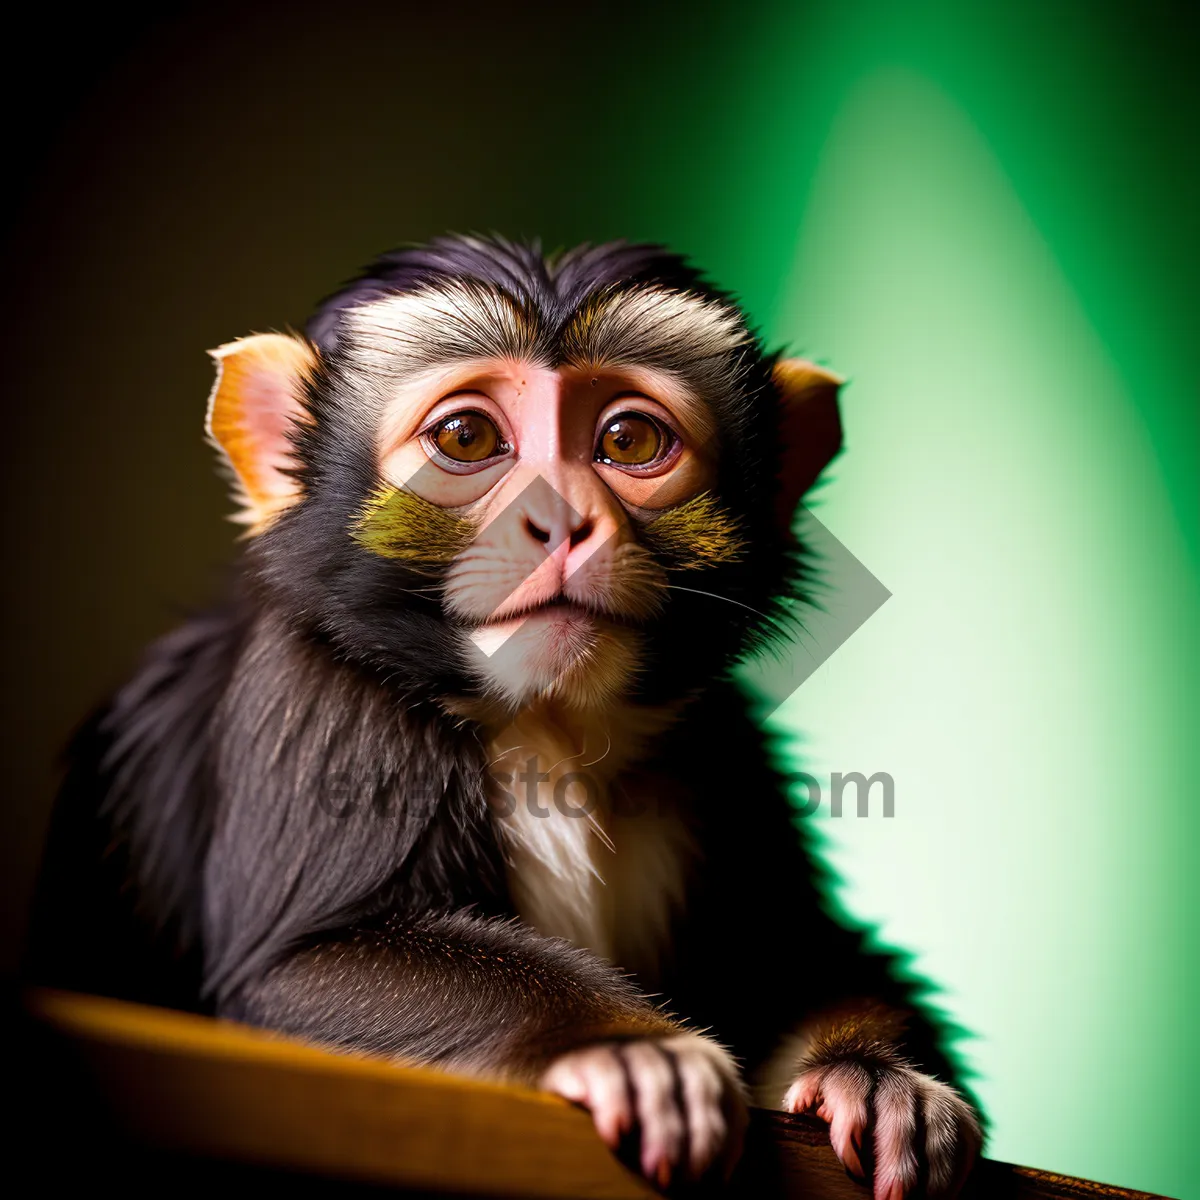 Picture of Mystic Primate's Cute Wild Face of Fur